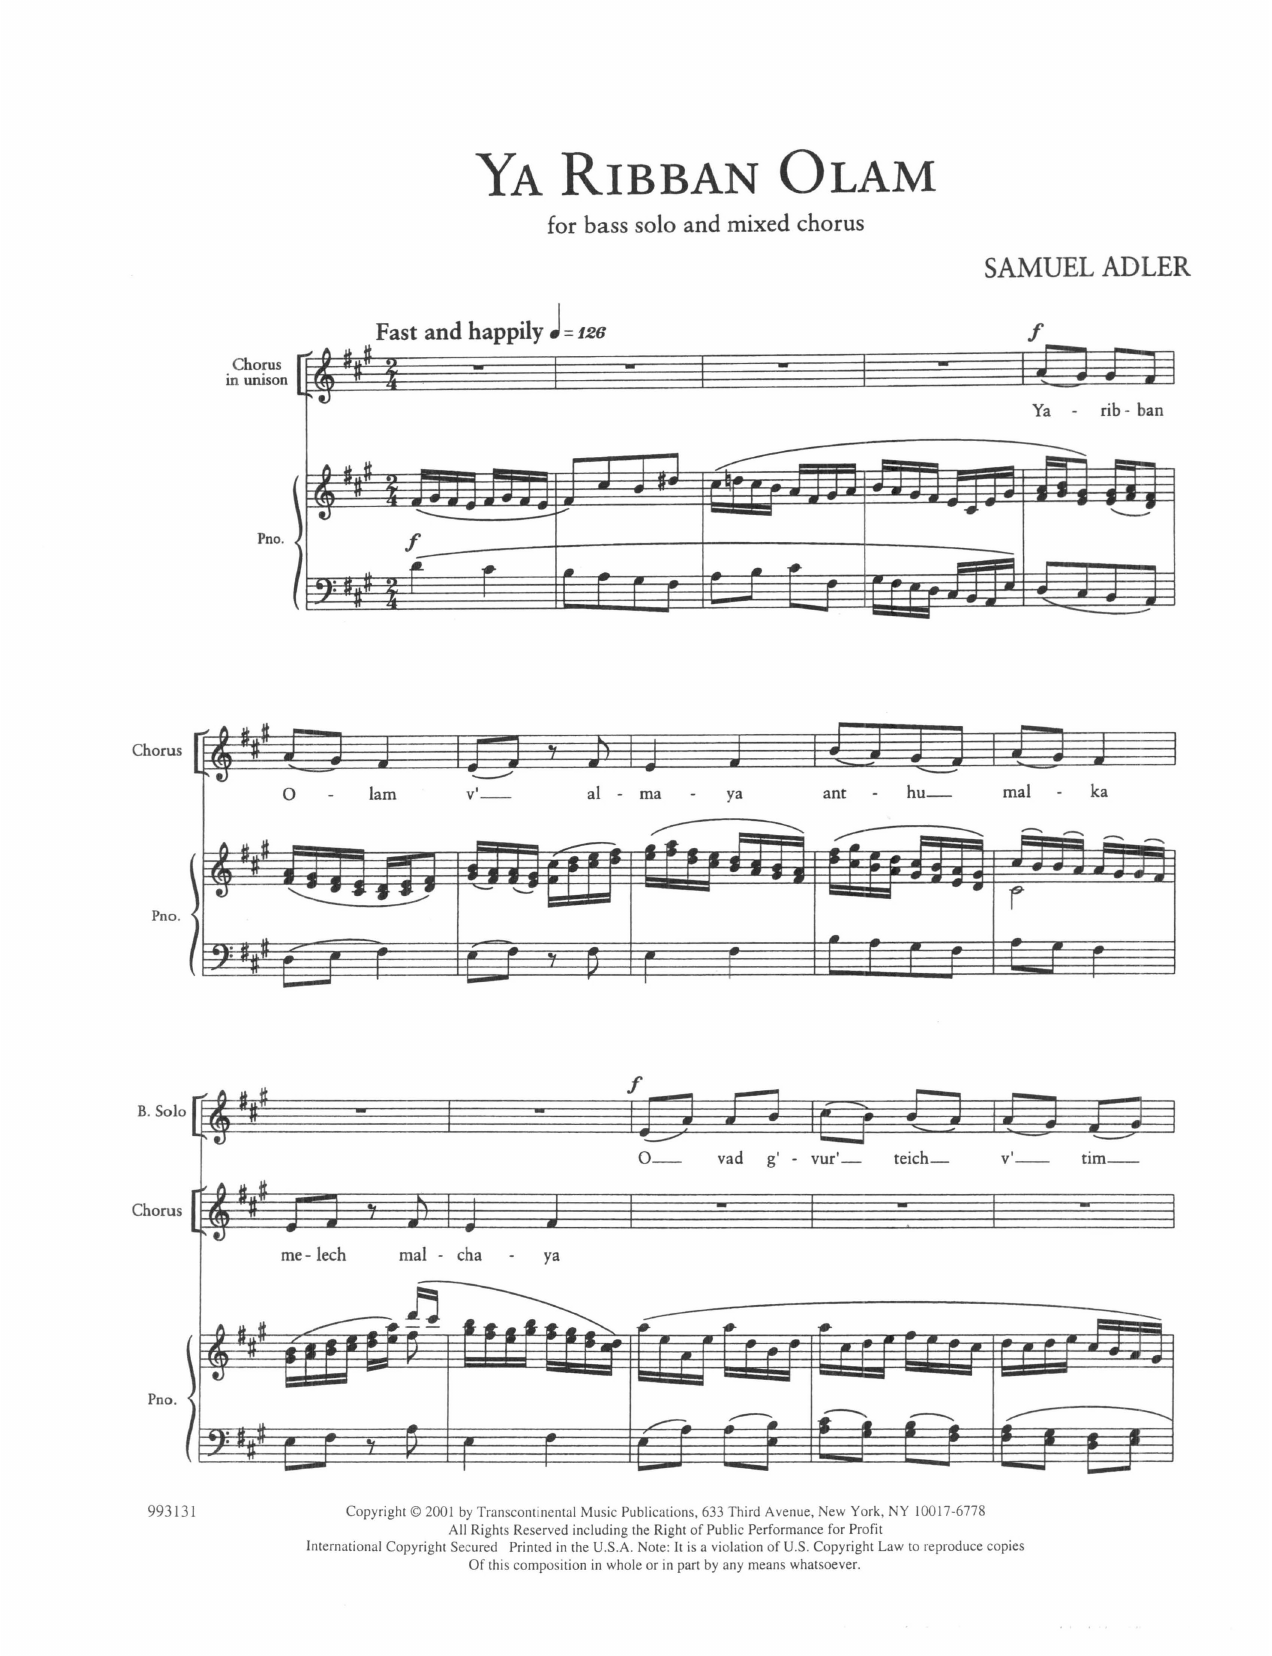 Download Samuel Adler Five Sephardic Choruses: Ya Ribban Olam Sheet Music and learn how to play SATB Choir PDF digital score in minutes